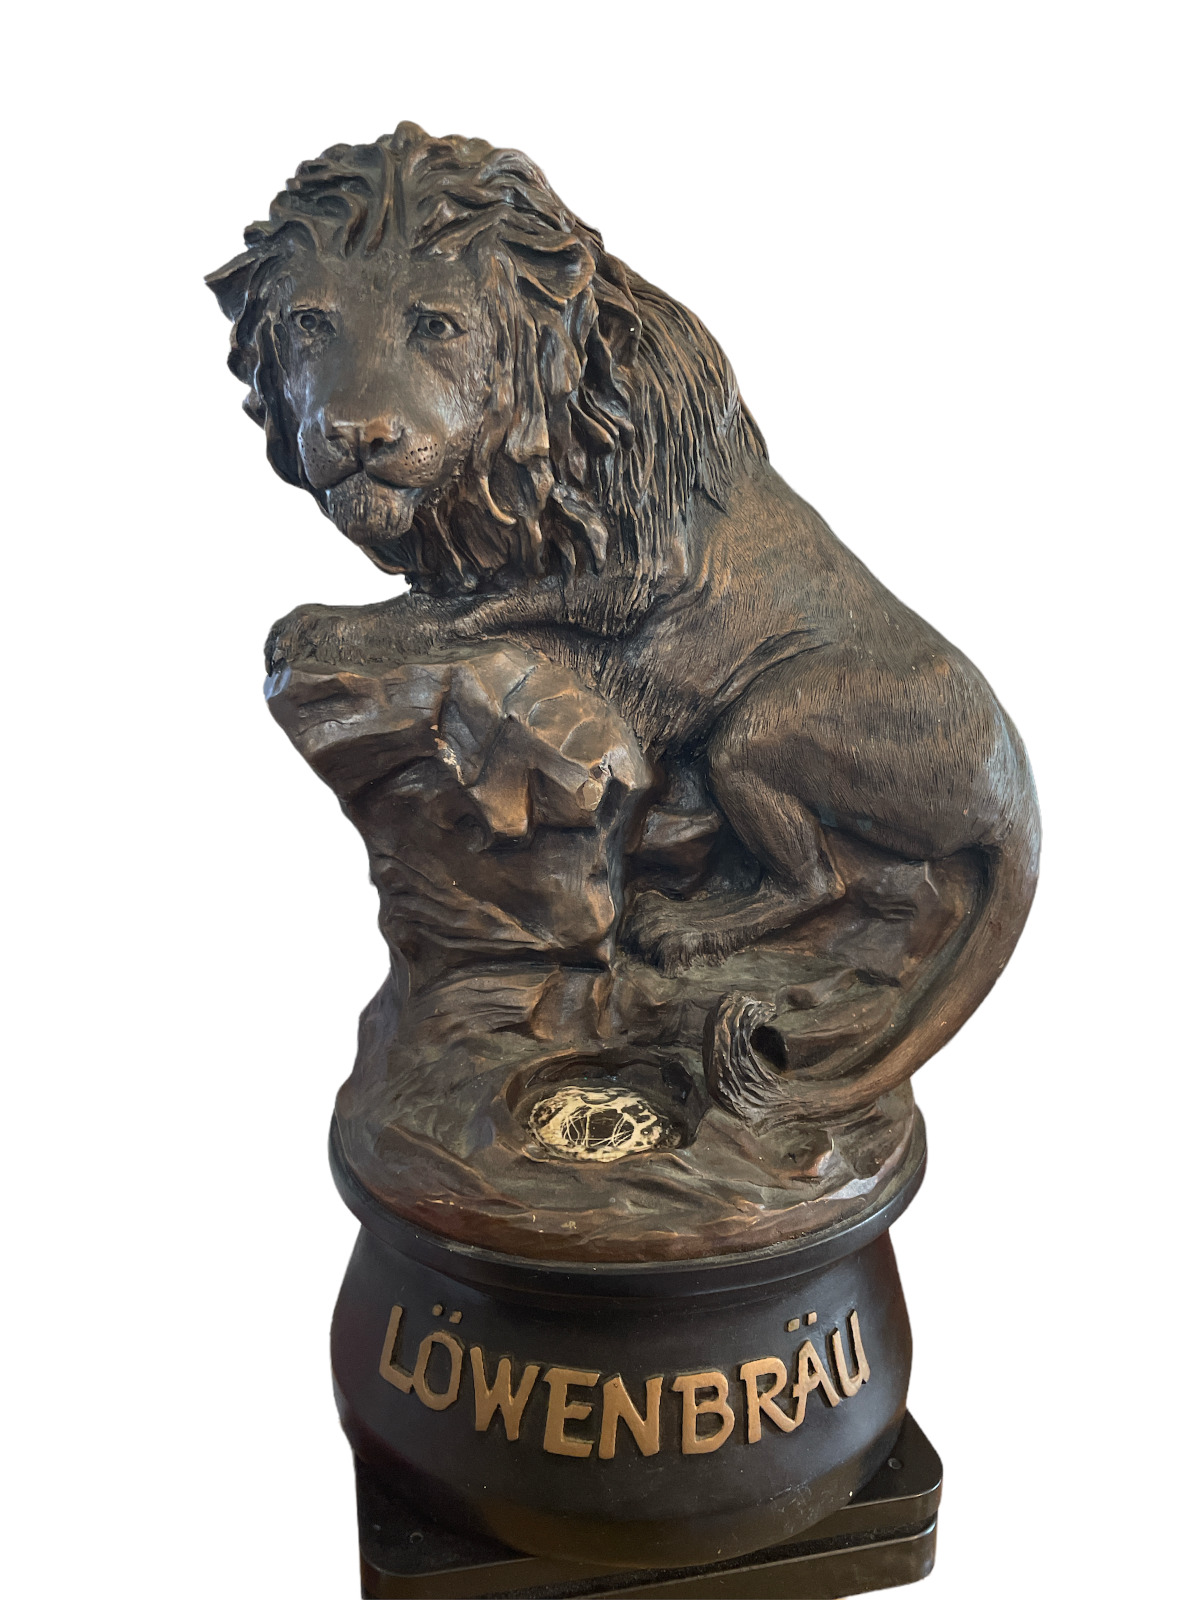  Vintage Lowenbrau Lion Sculpture Advertisement Display